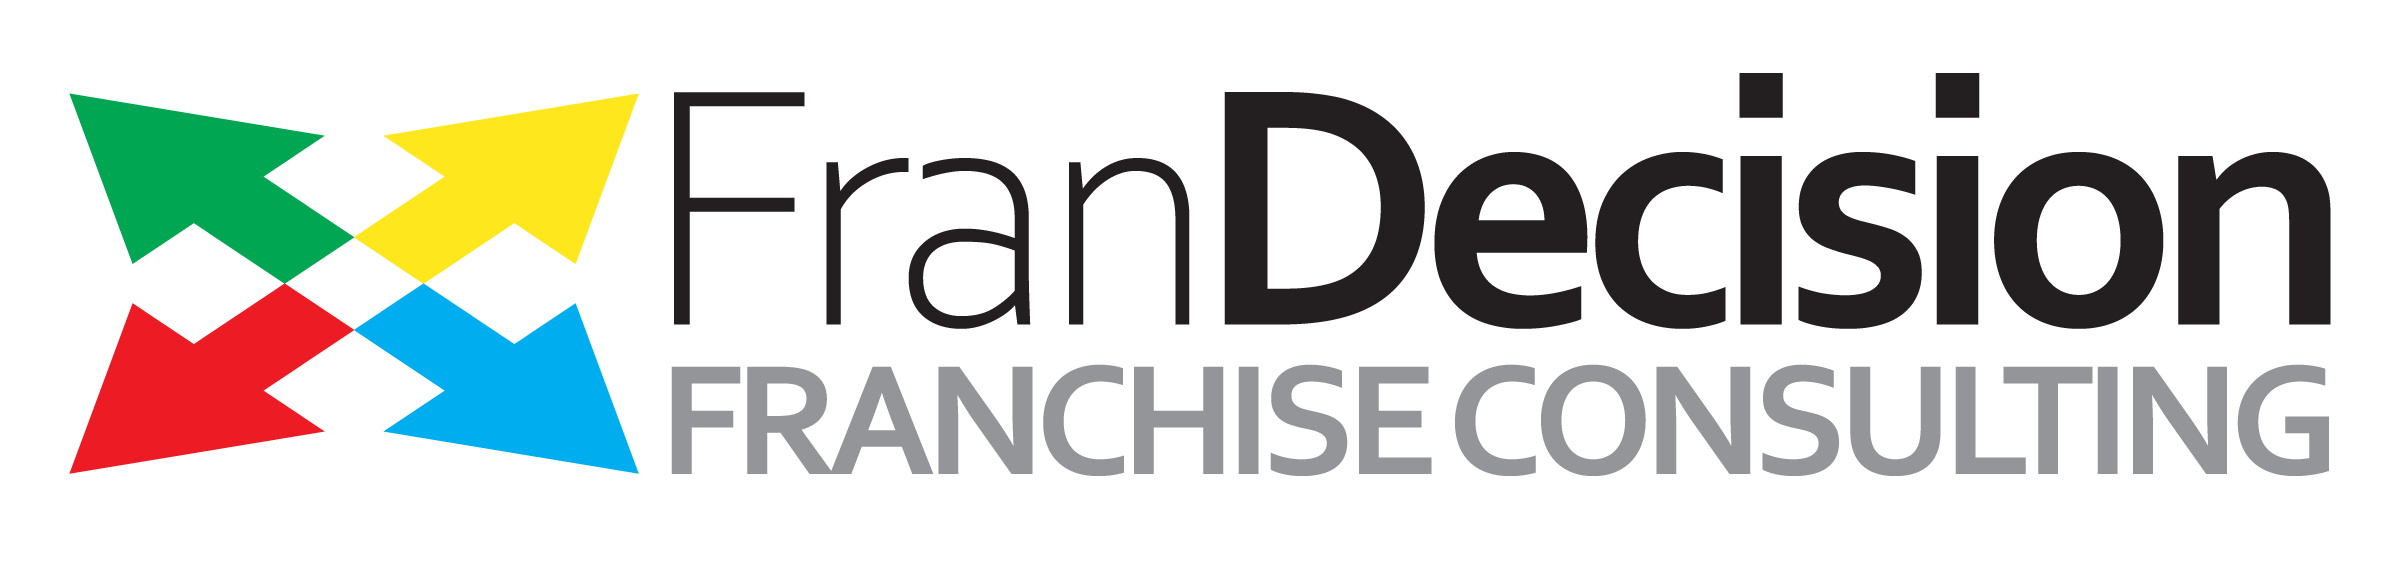 FranDecision Franchise Consulting logo